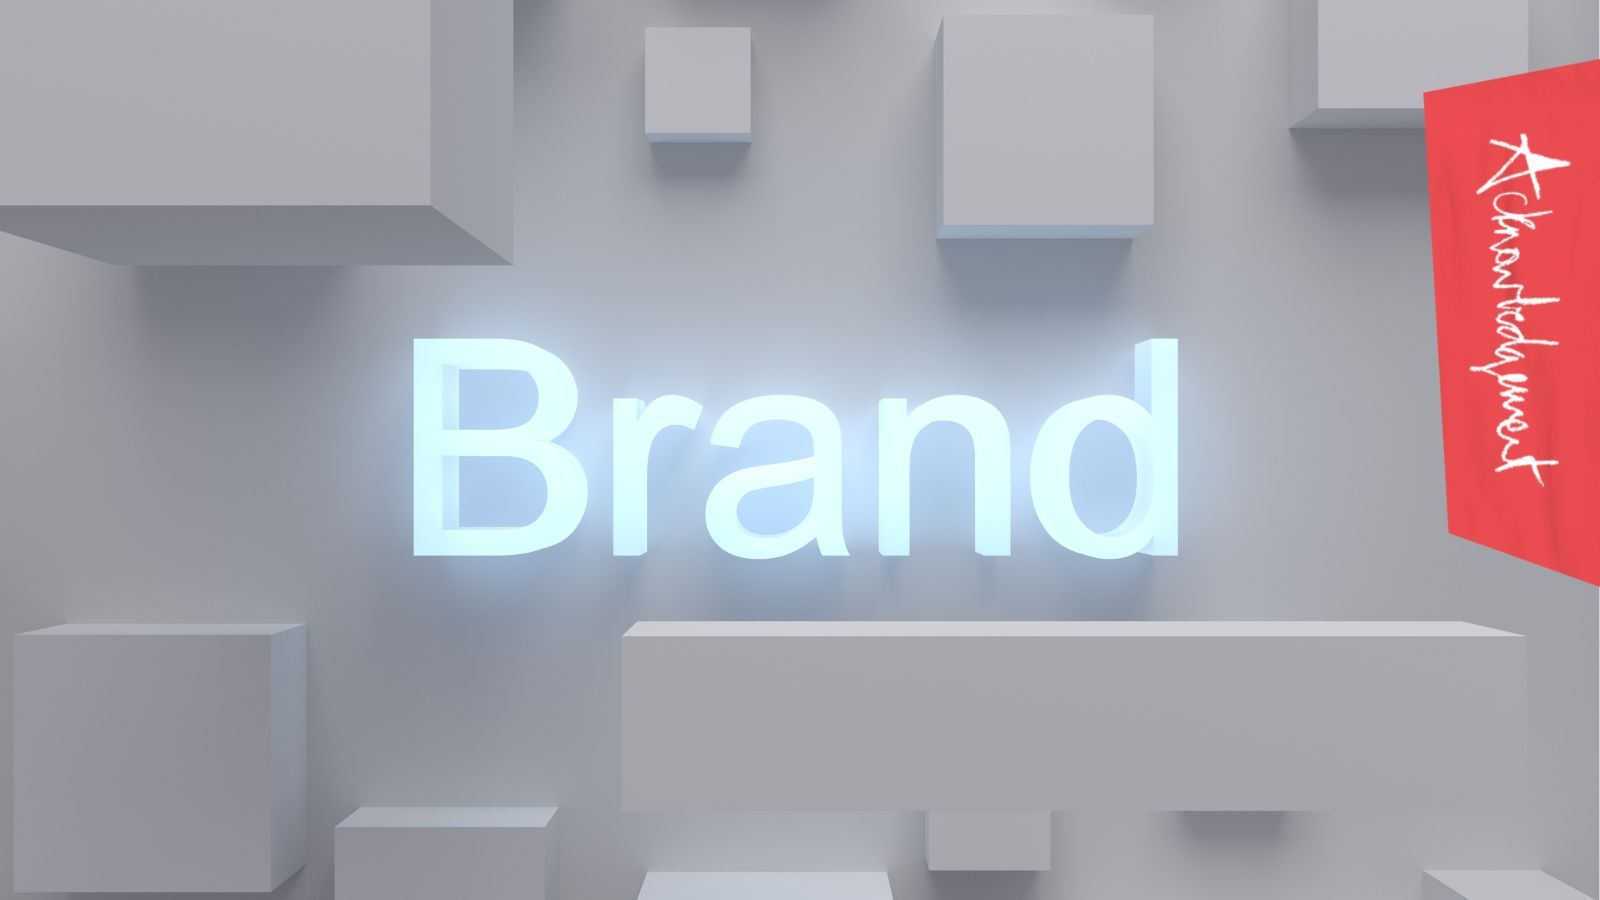 "Brand" title graphic